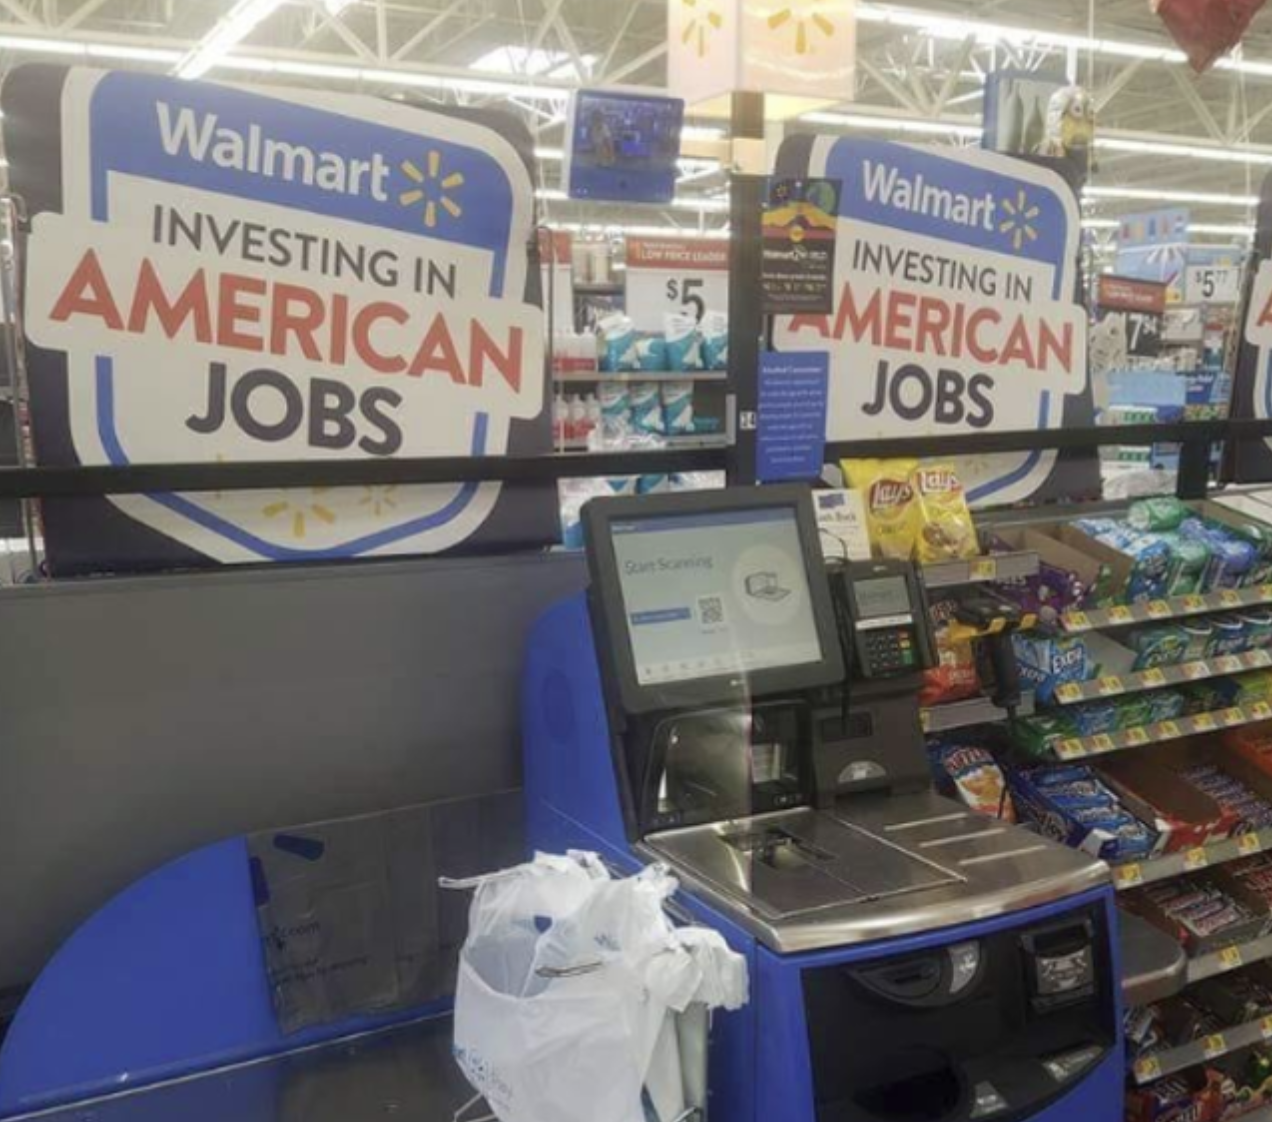 Facepalms - walmart american jobs - Walmart Investing In American Jobs $5 Walmart Investing In